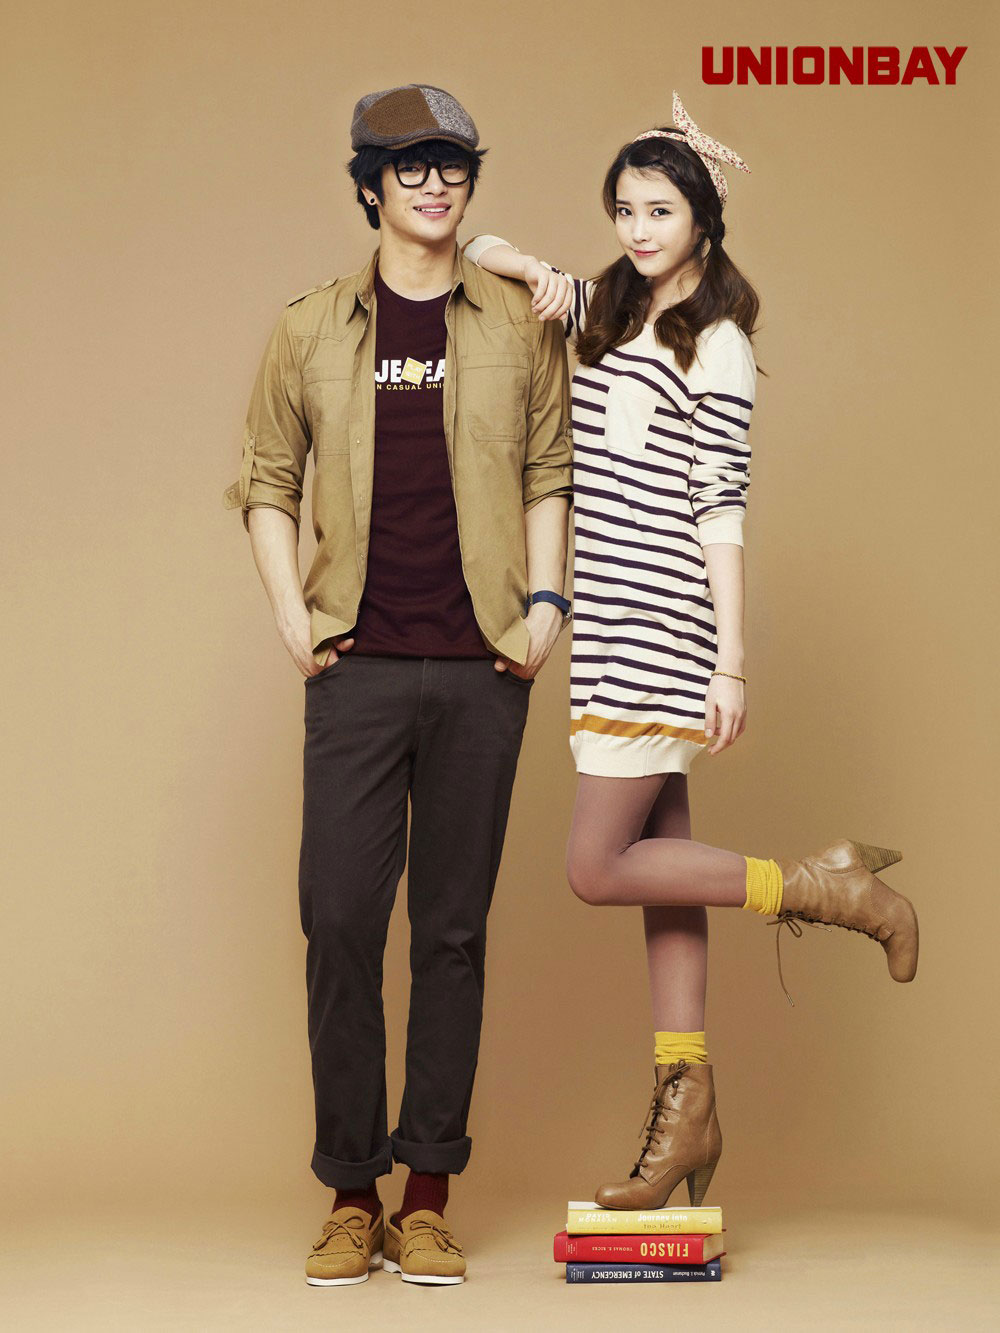 IU Seo Inguk Korean Unionbay clothing